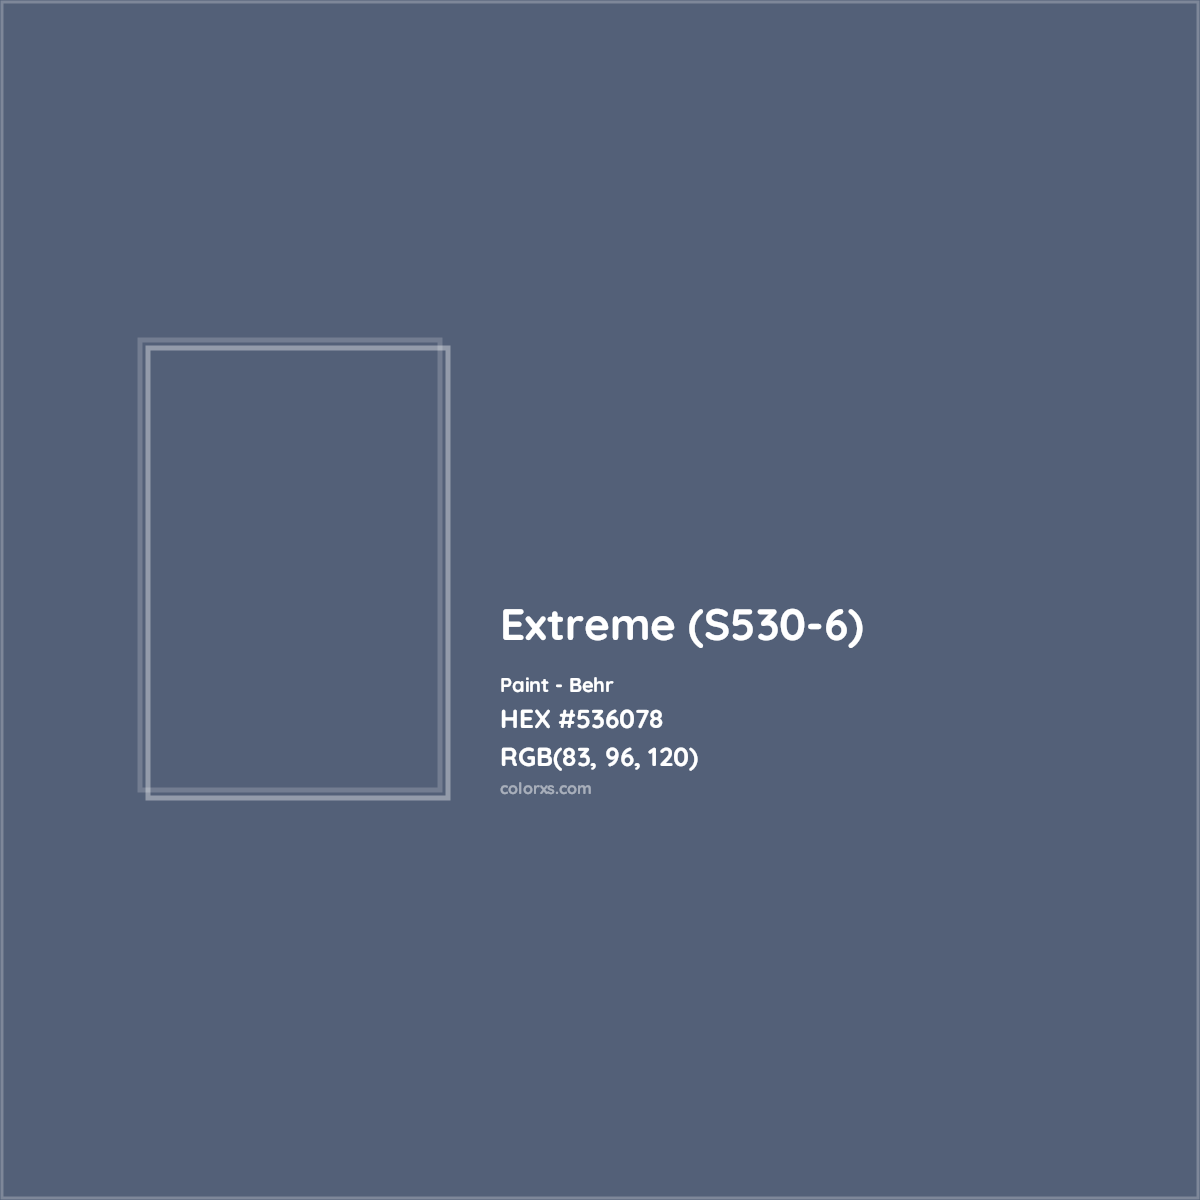 HEX #536078 Extreme (S530-6) Paint Behr - Color Code